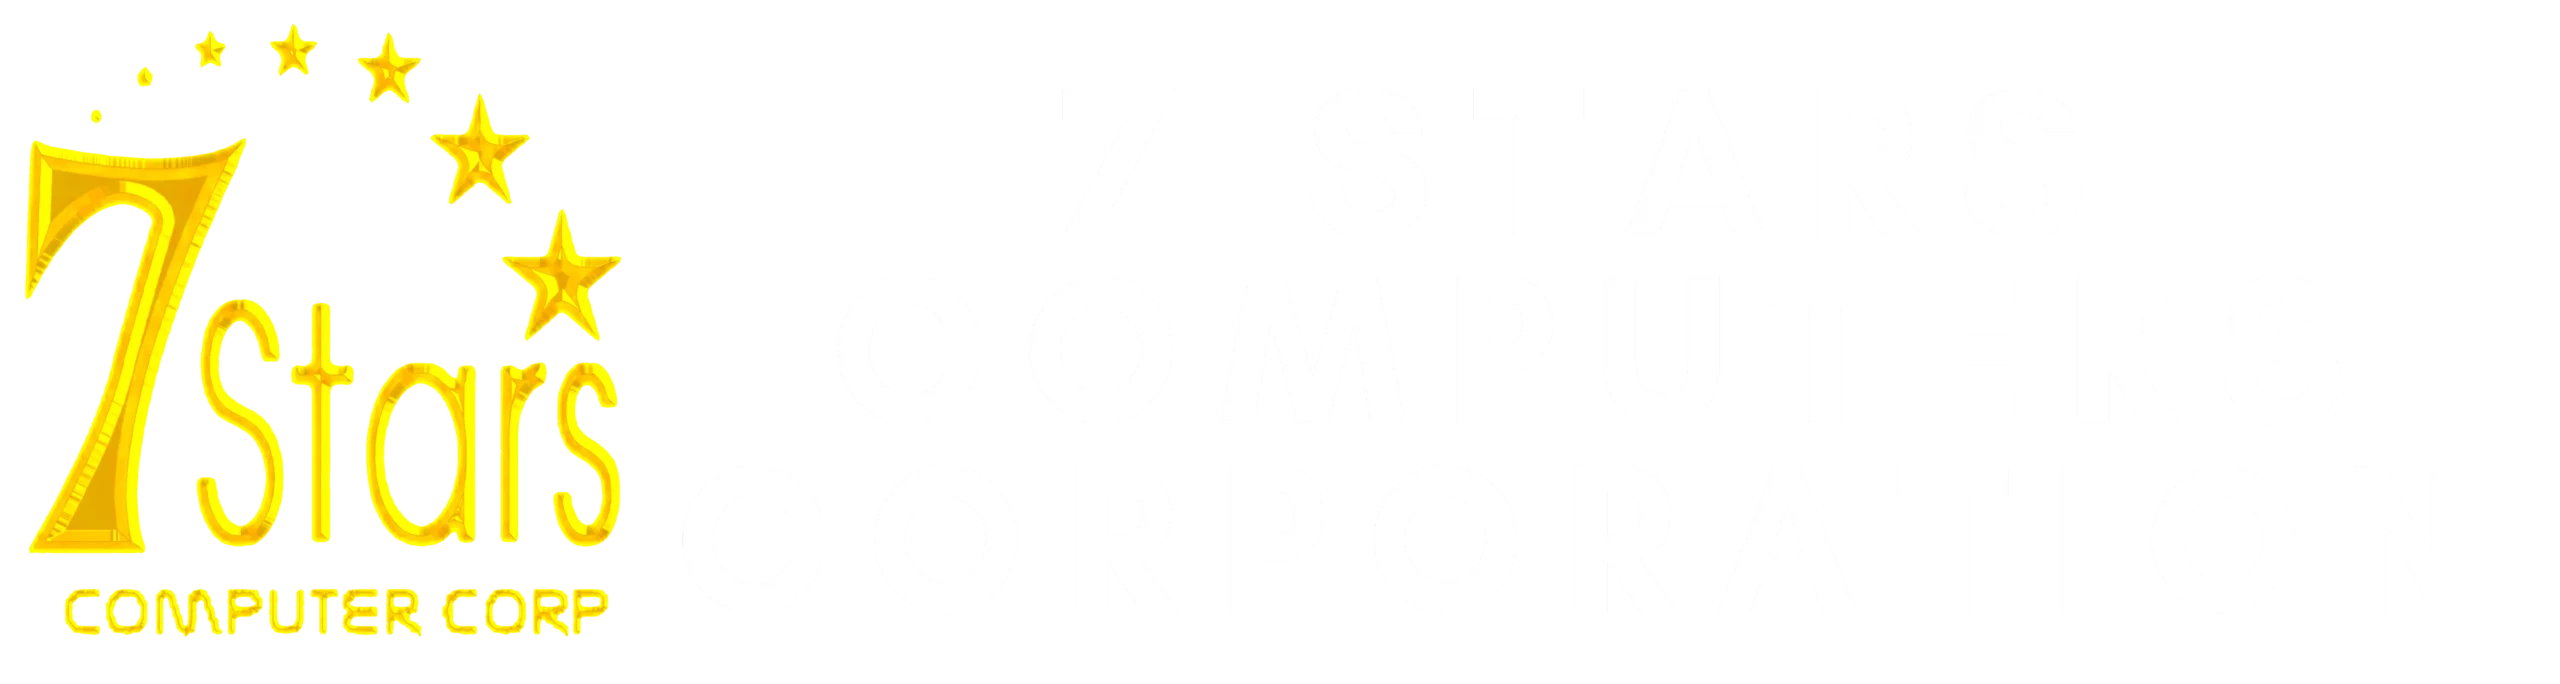 7 Stars Computers Corporation